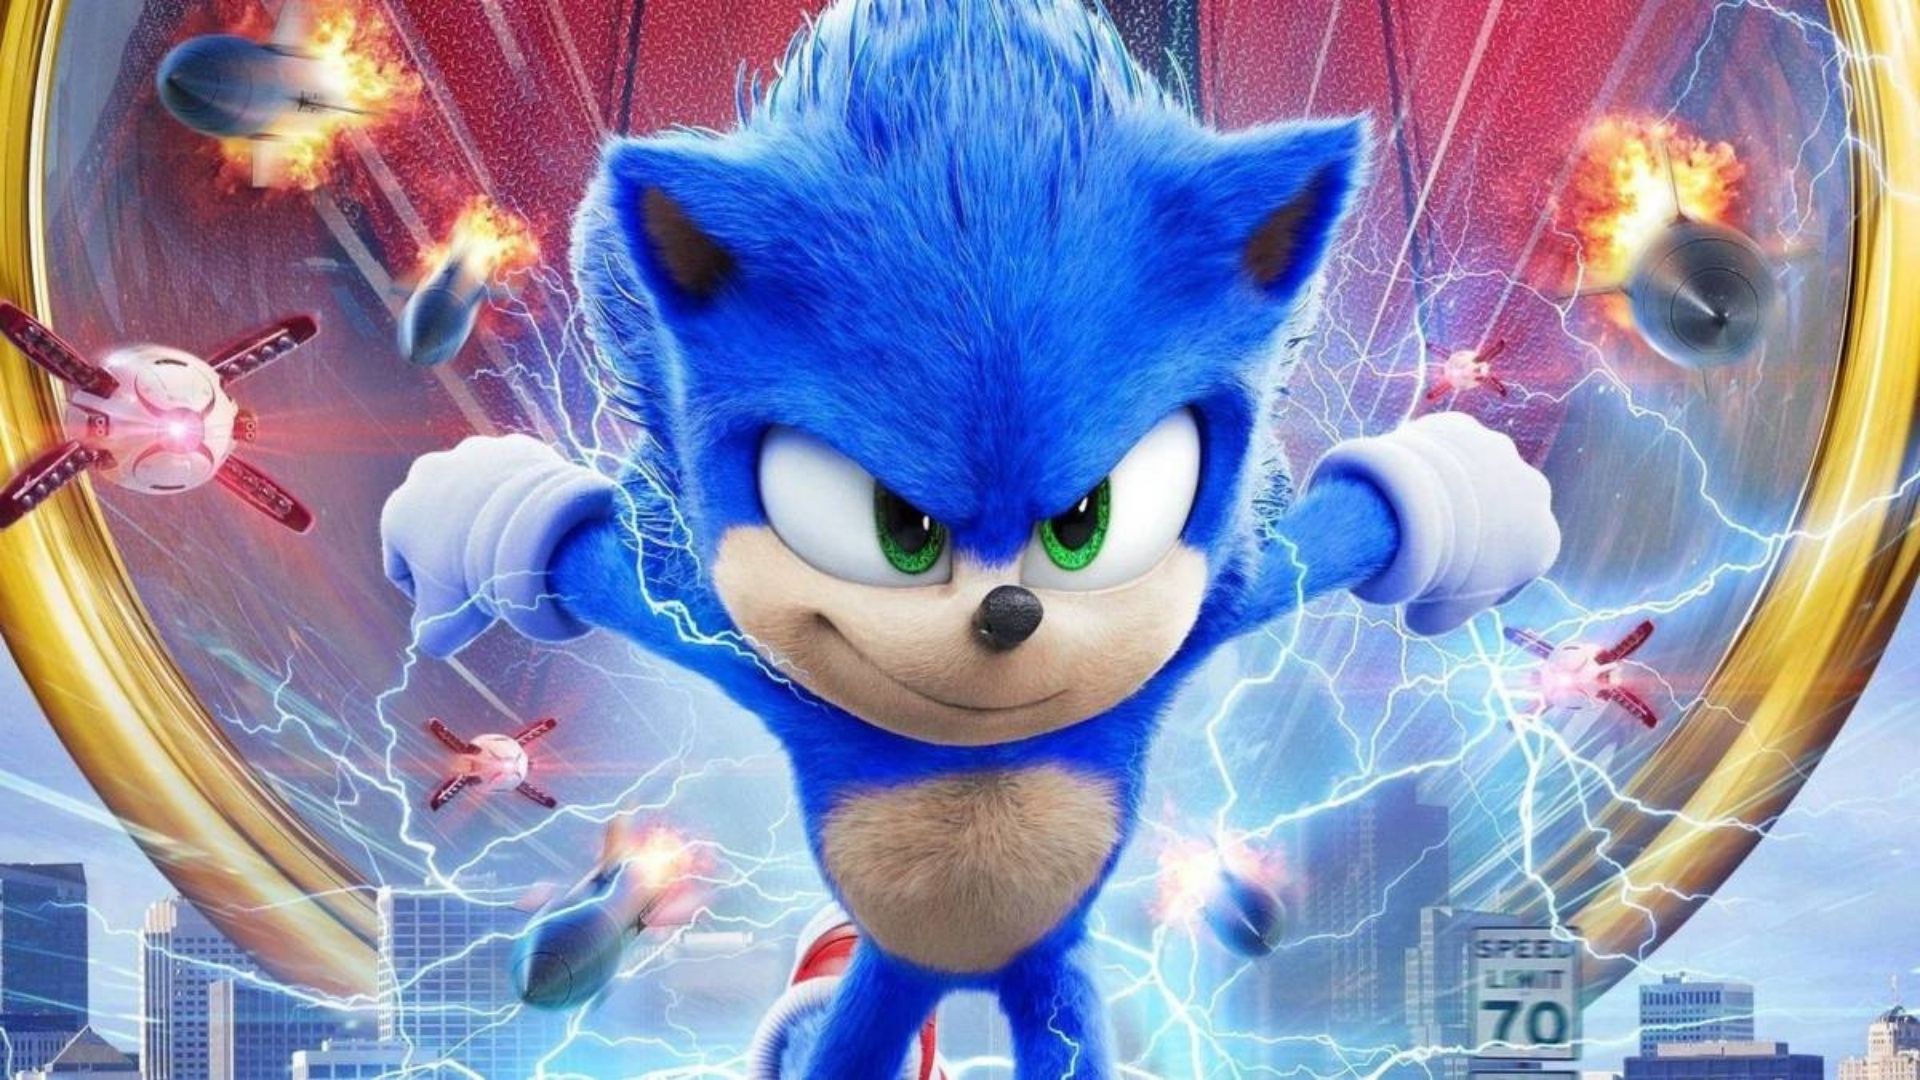 Contriteorb4☆ on X: Sonic The Hedgehog 3 Movie (2024) https